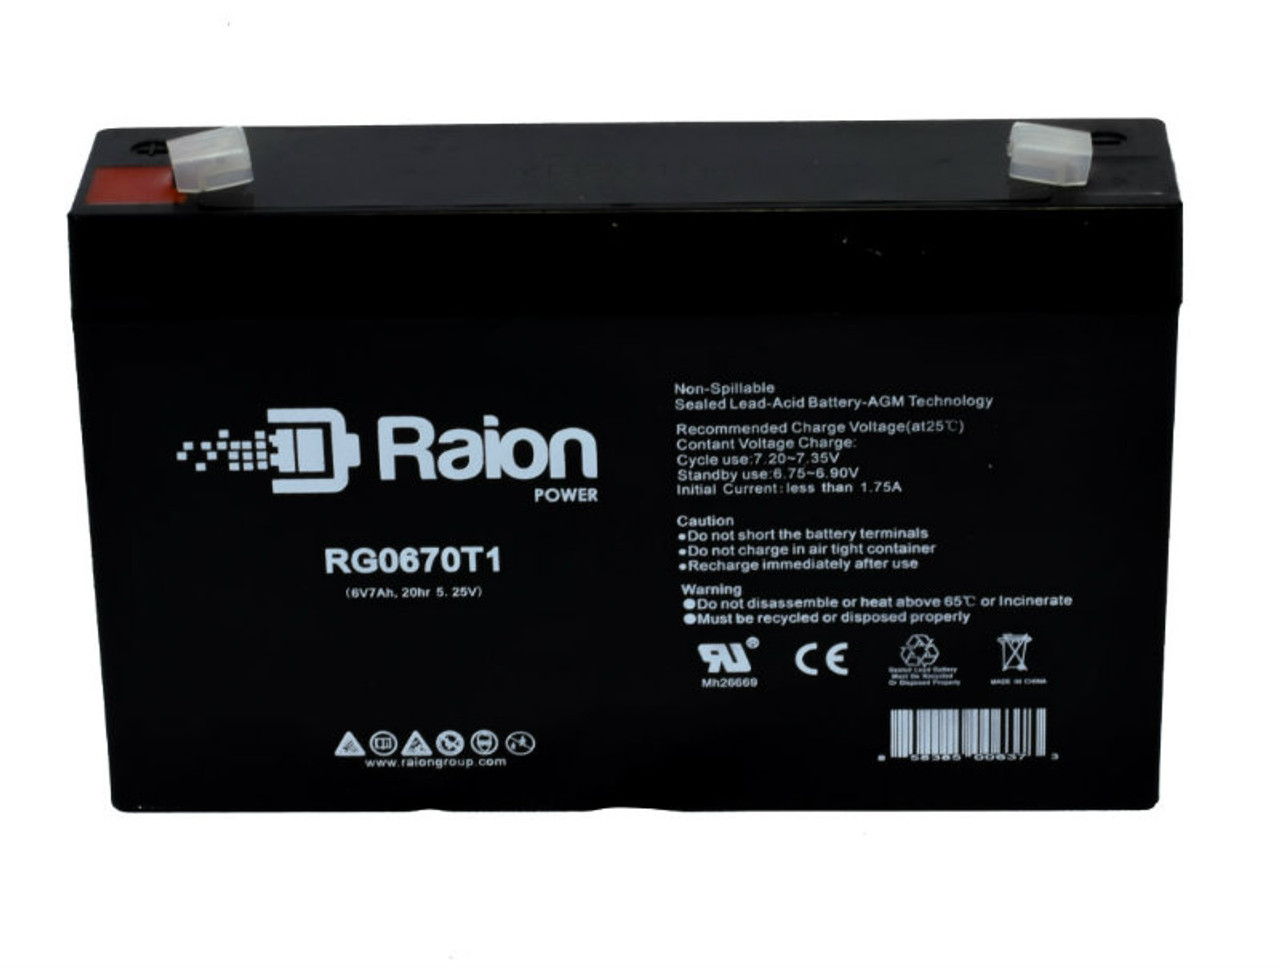 Raion Power RG0670T1 Replacement Battery Cartridge for Sonnenschein 153302004